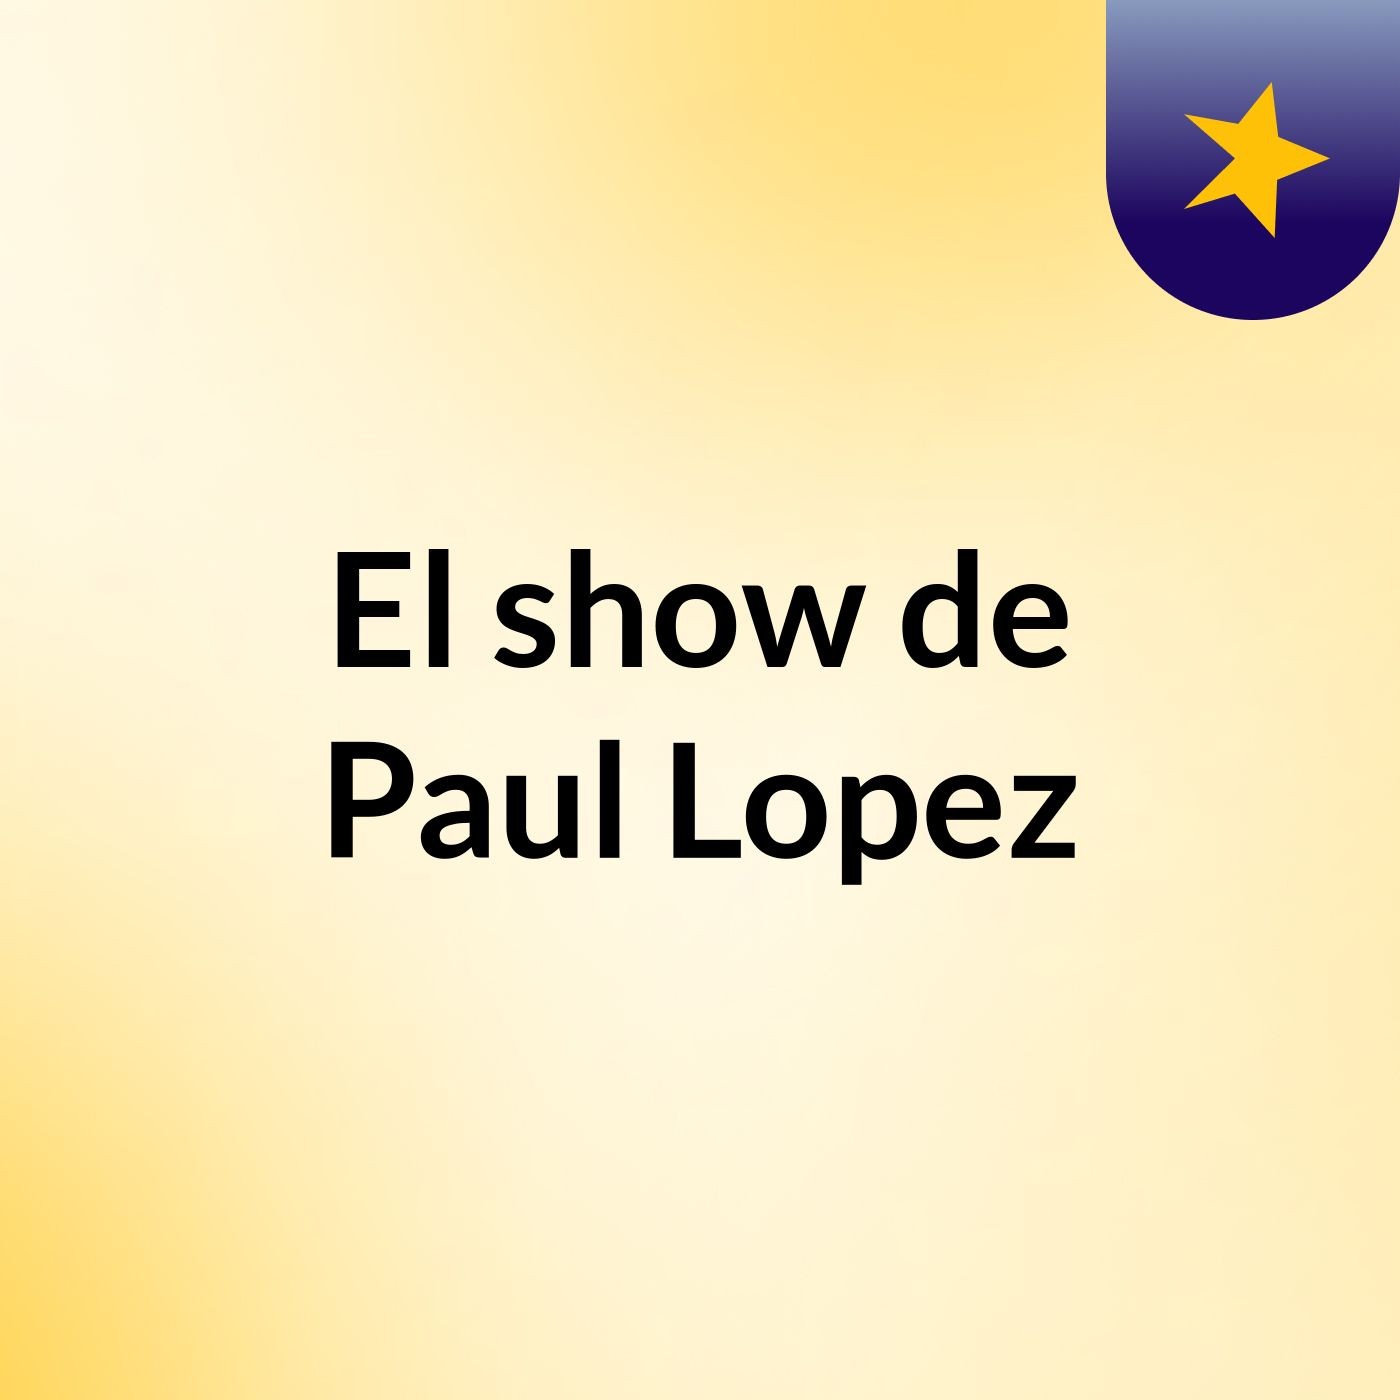 El show de Paul Lopez